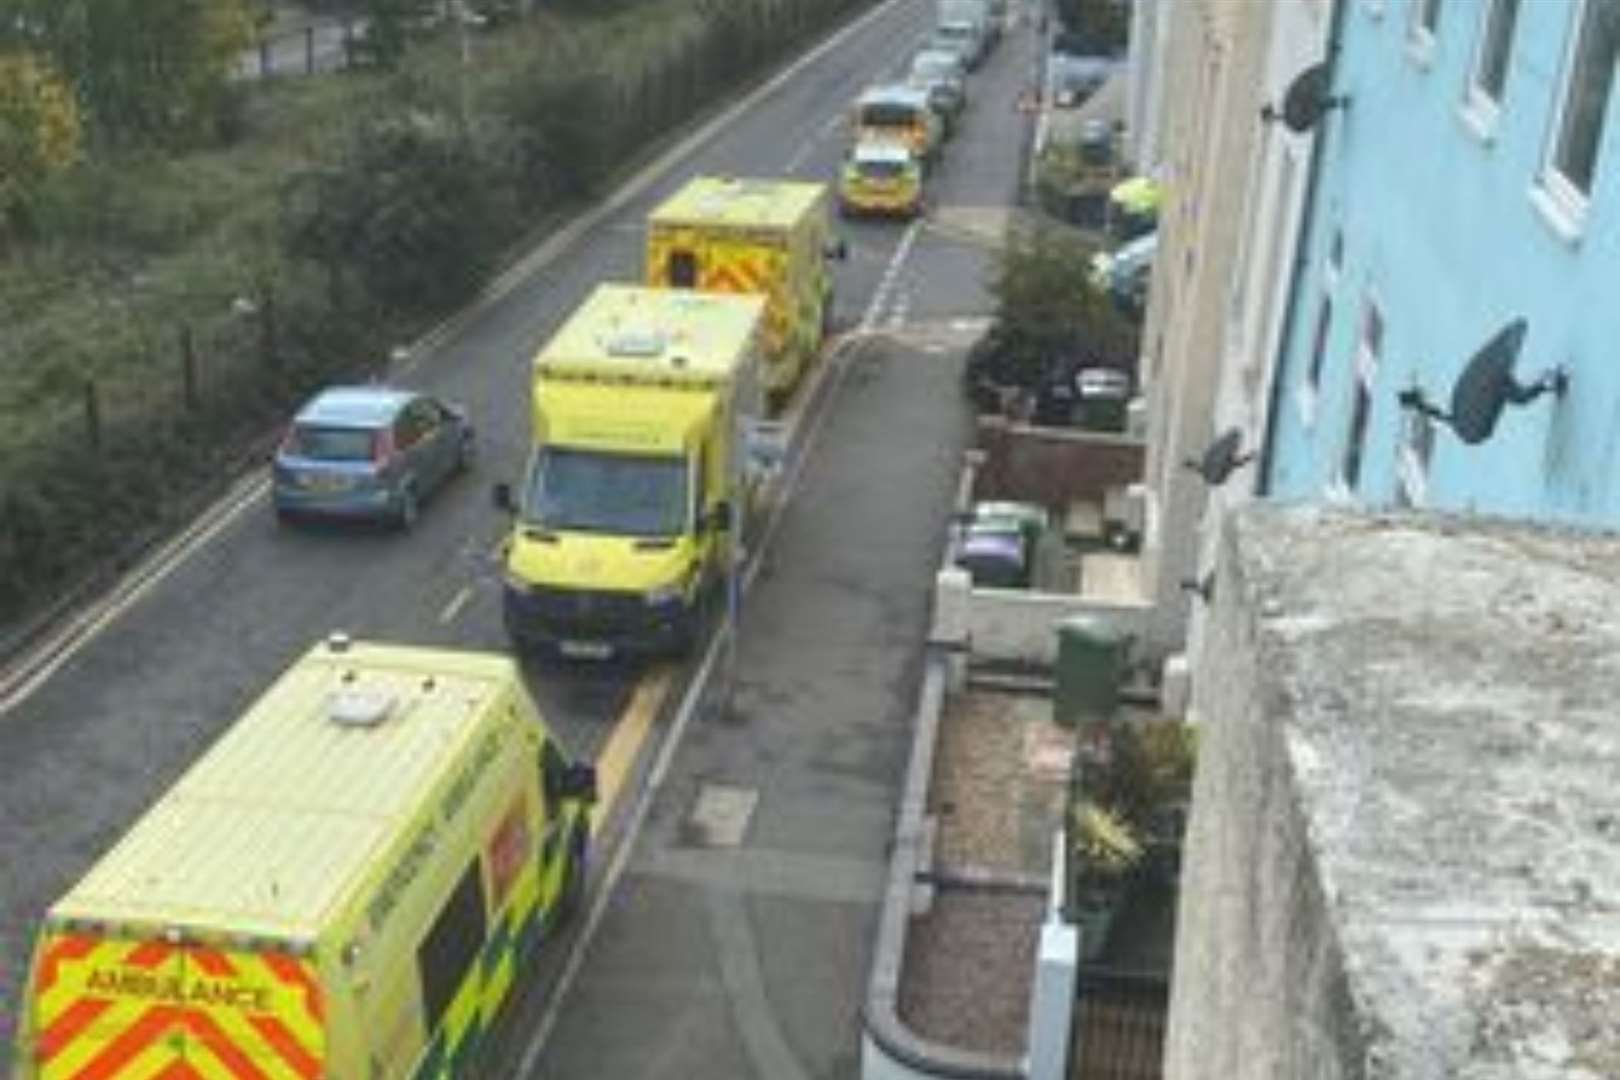 Emergency services have descended on Tram Road